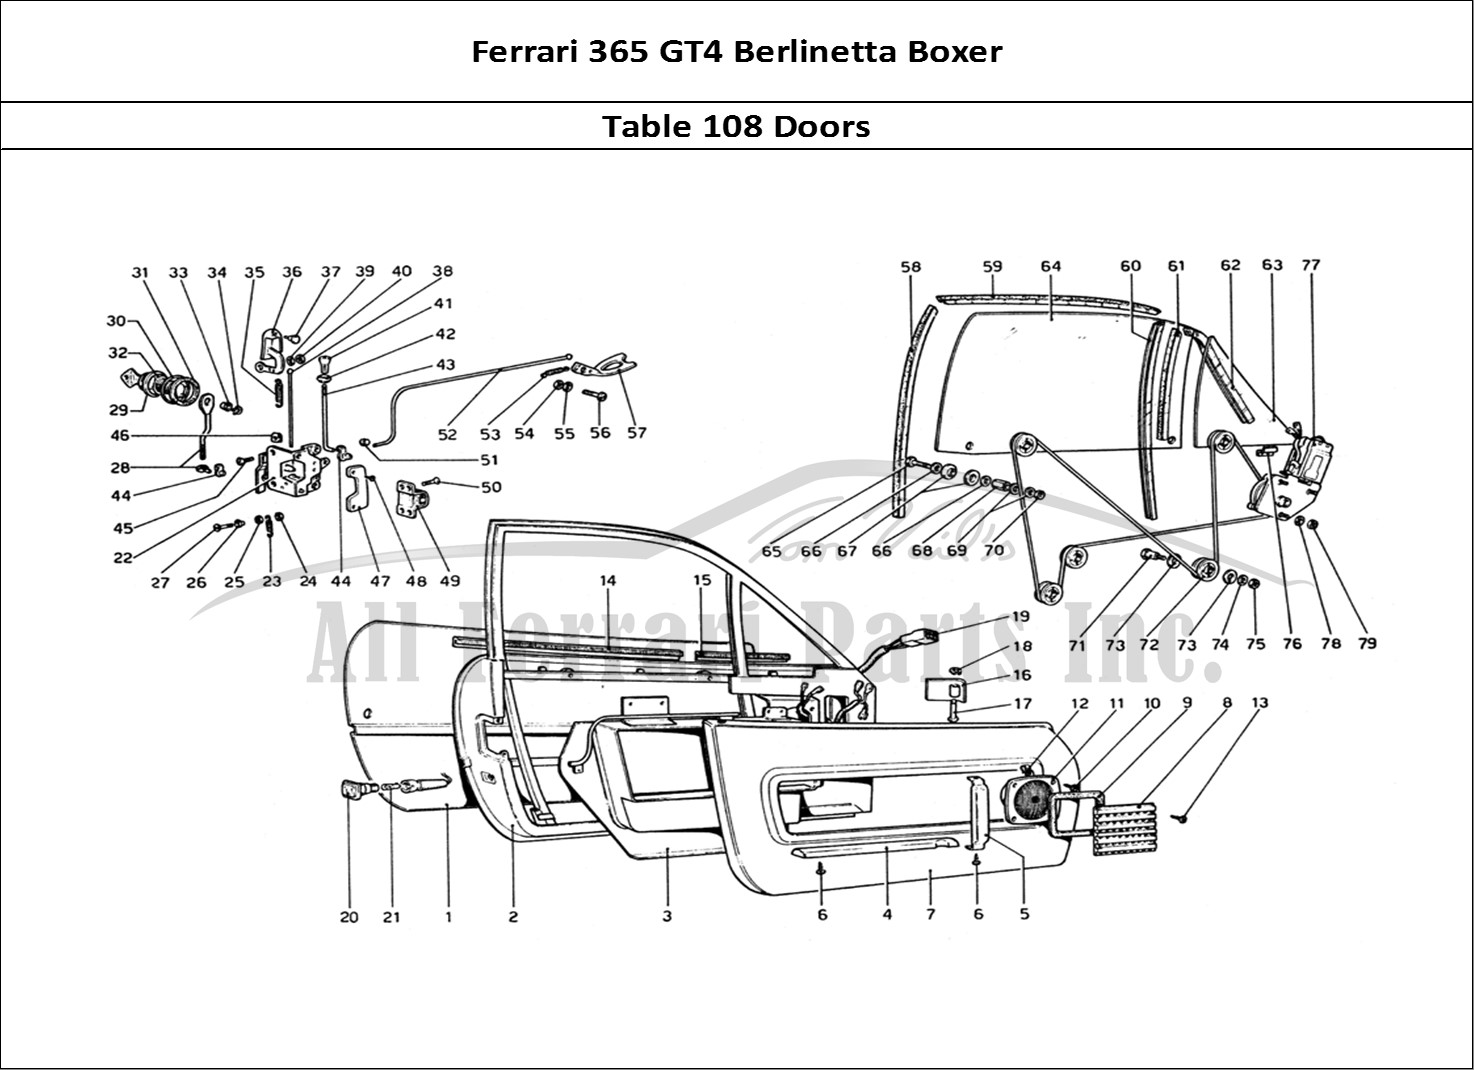 Ferrari Parts Ferrari 365 GT4 Berlinetta Boxer Page 108 Doors